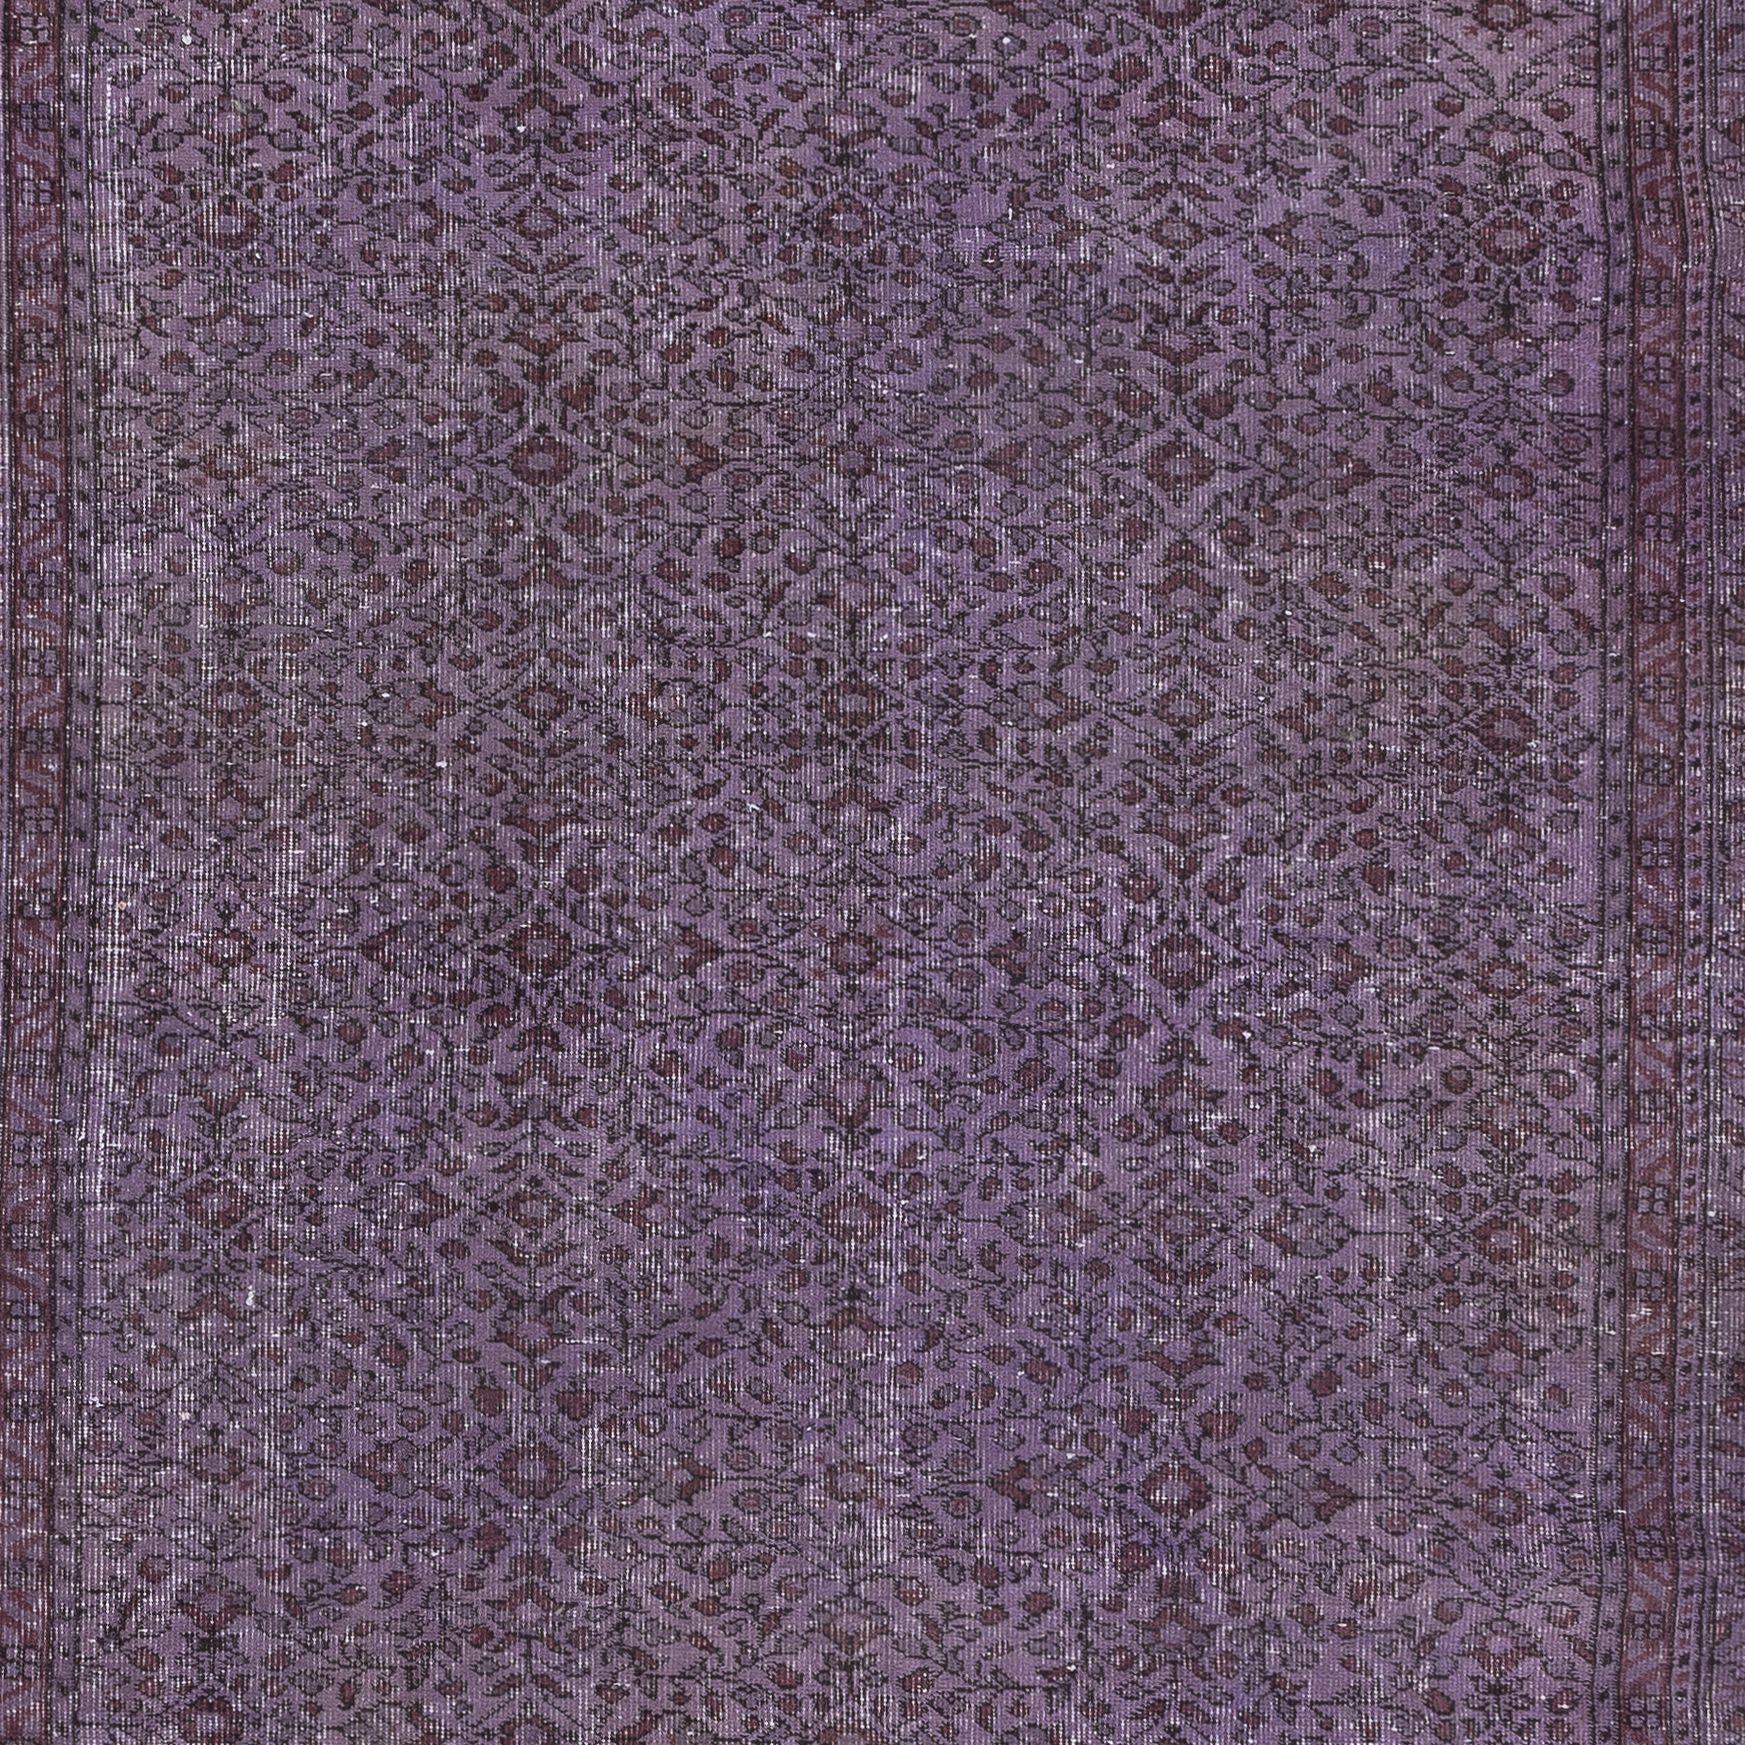 Modern 6.2x9.3 Ft Splendid Handmade Turkish Rug with Flower Design & Purple Background